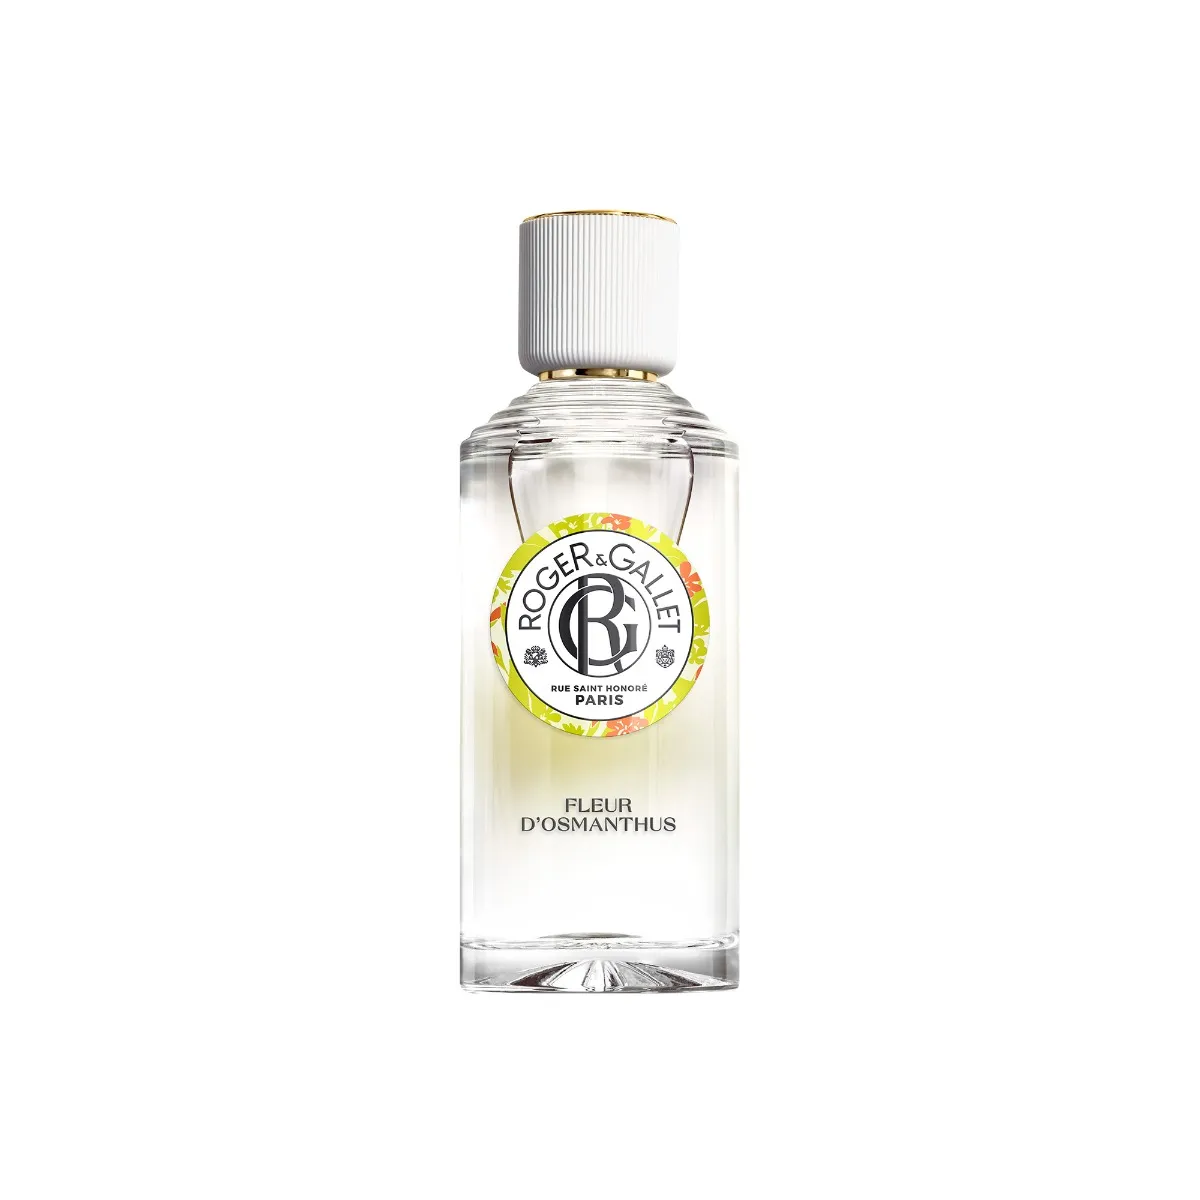 R&G Fleur d’Osmanthus Eau Parfumée 100 ml Acqua di benessere profumata